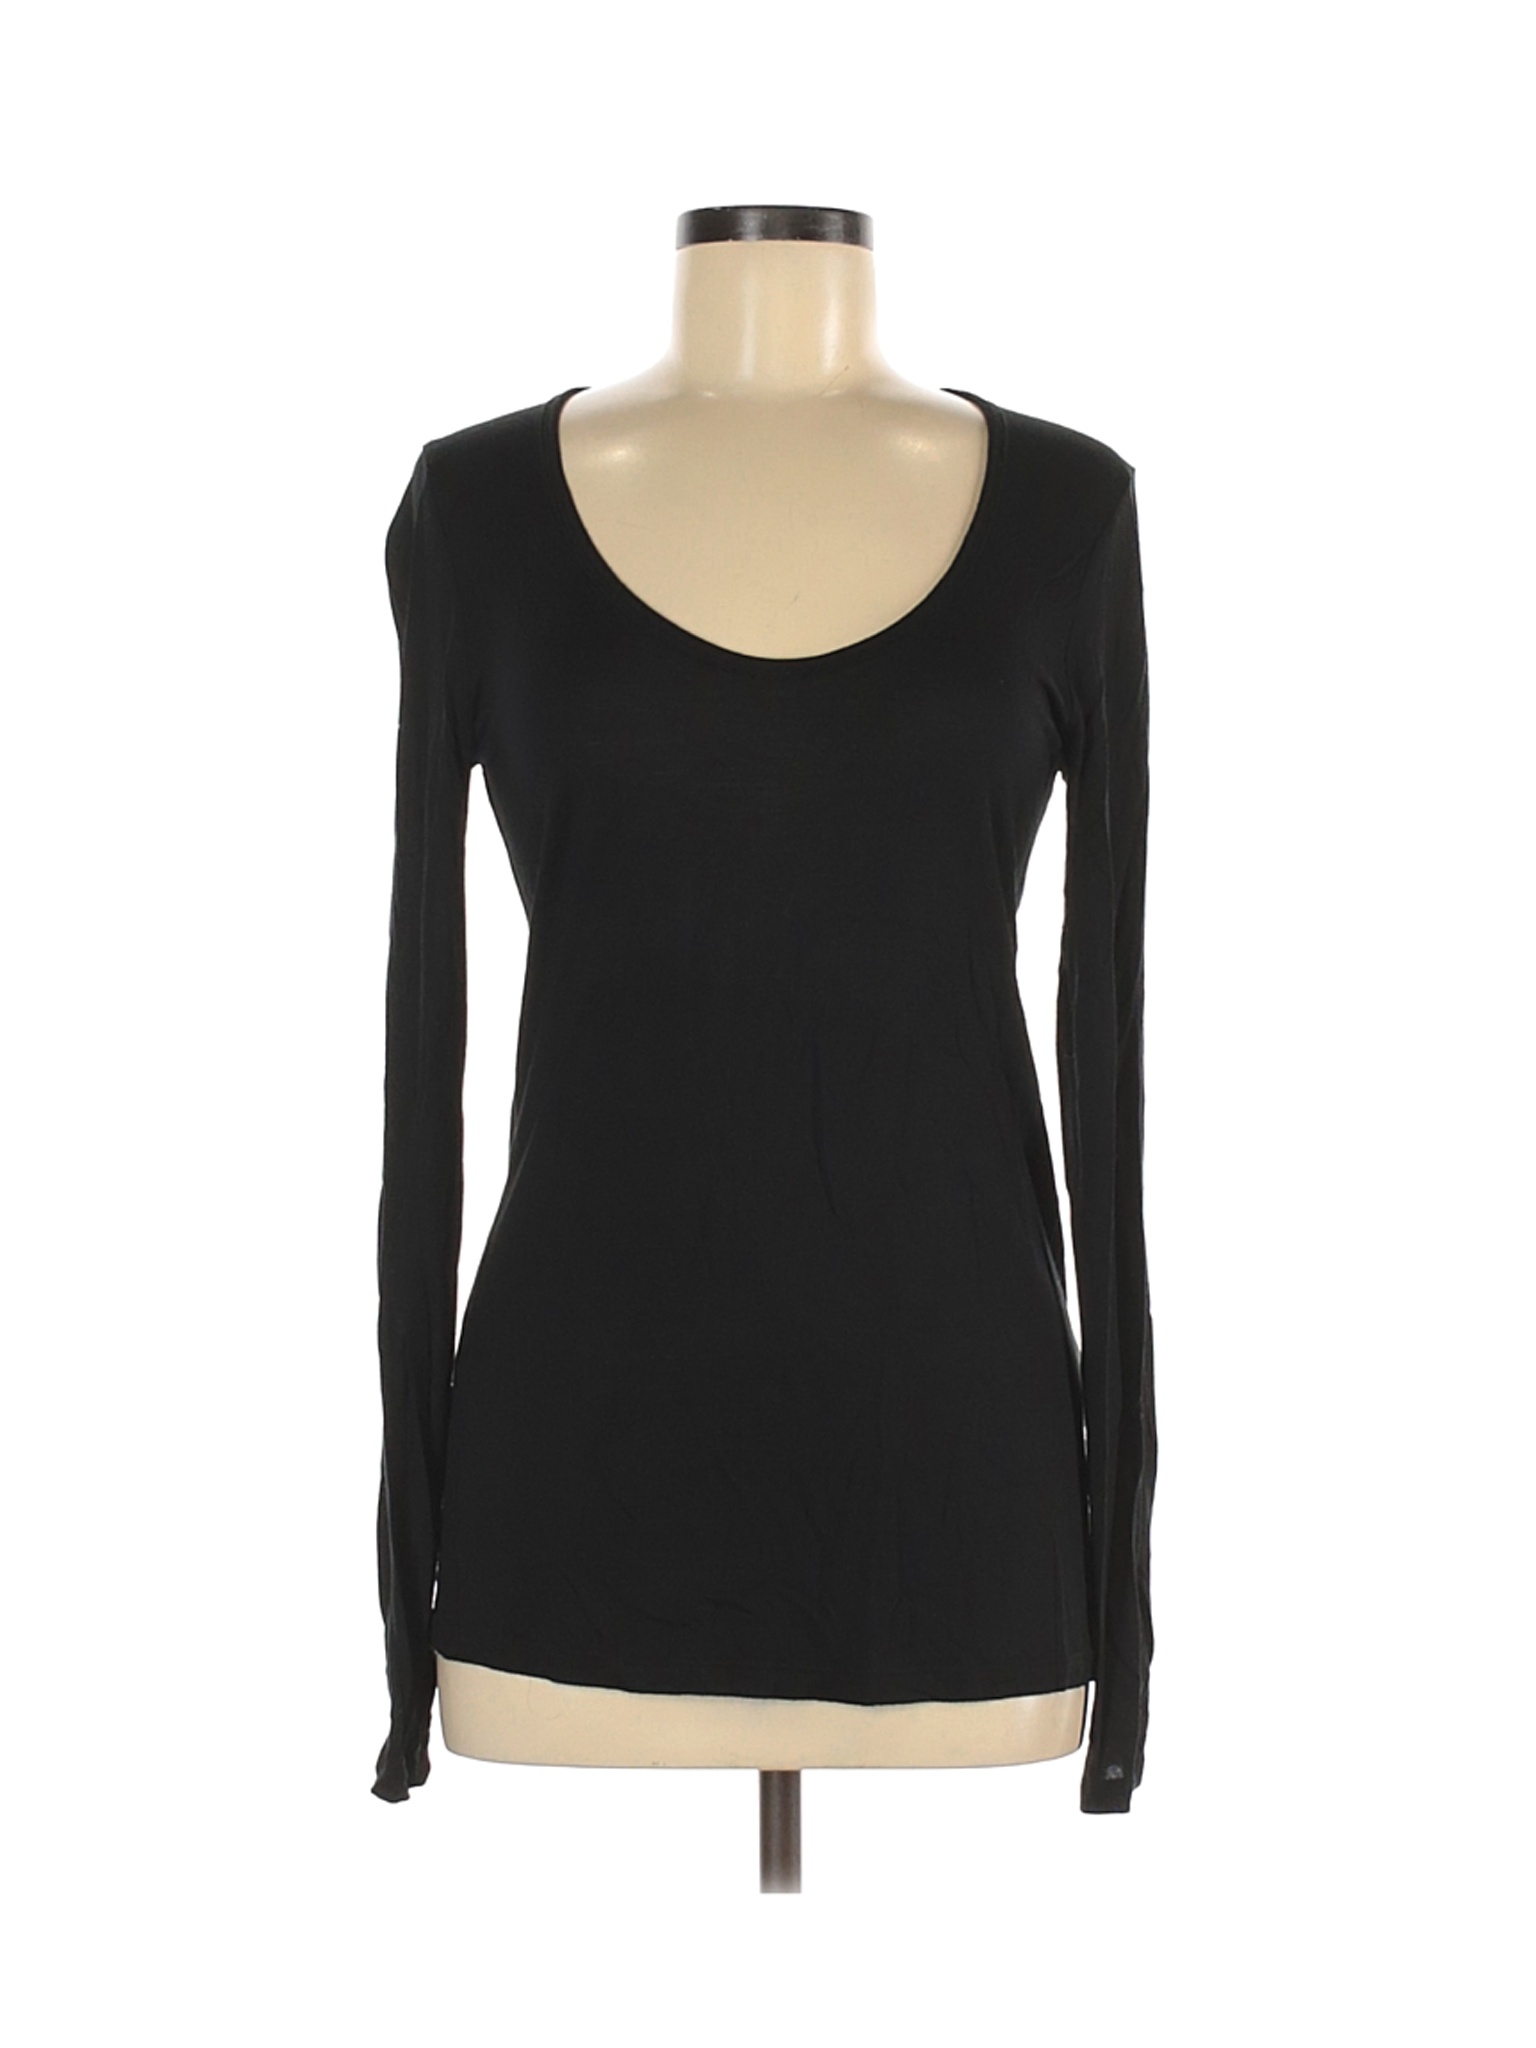 Banana Republic Women Black Long Sleeve T-Shirt M | eBay